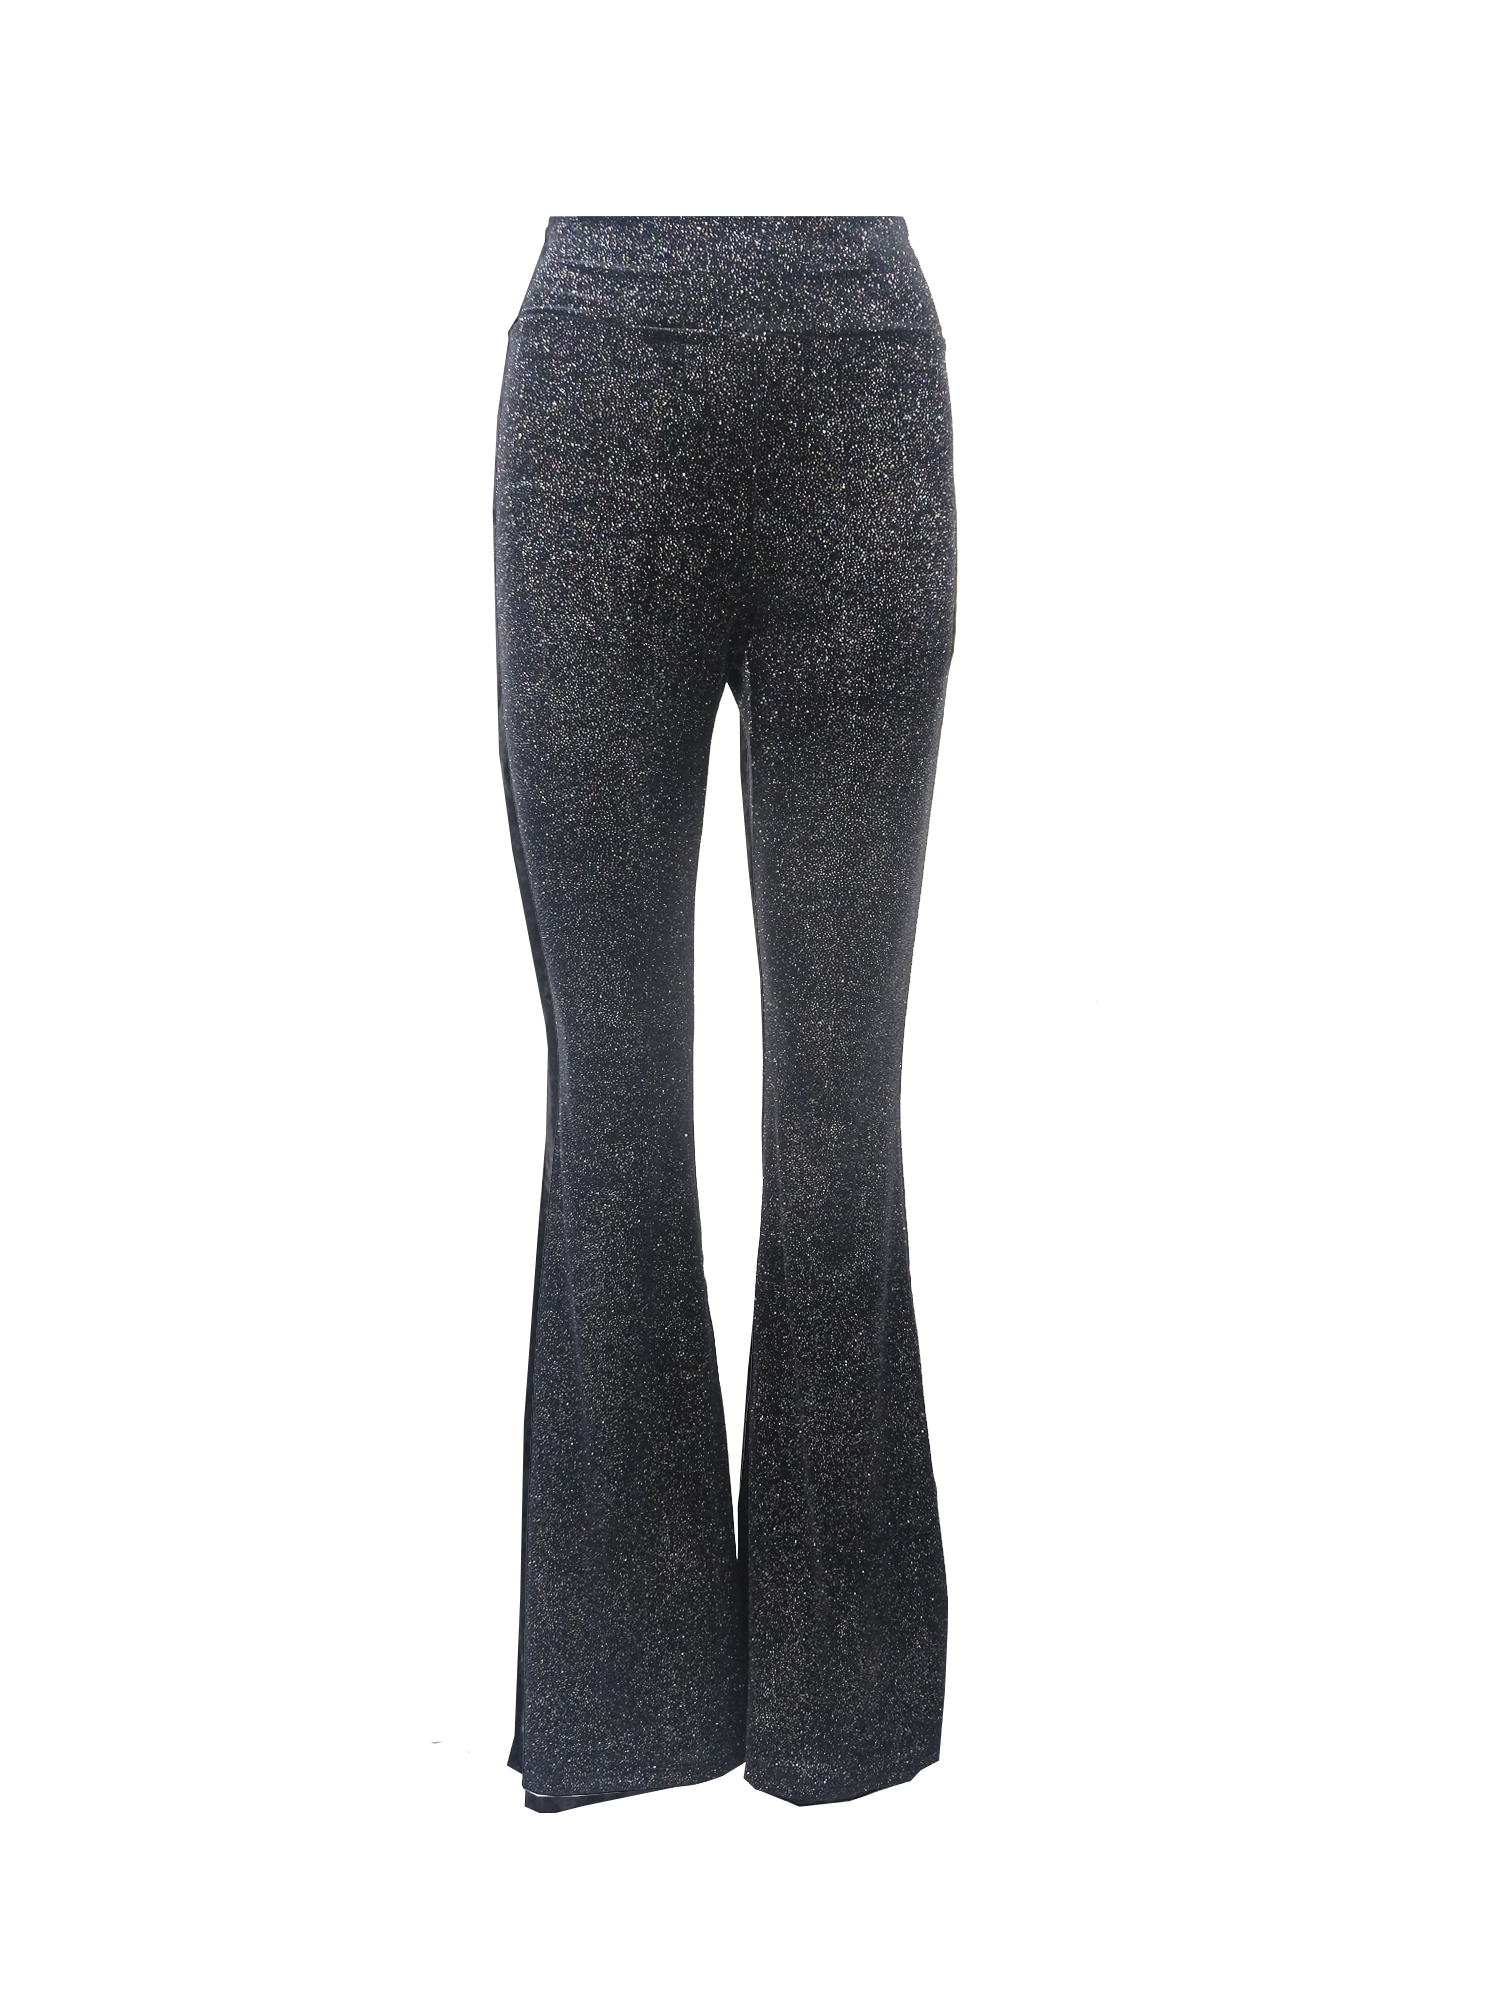 LOLA - flared pants in black glitter chenille